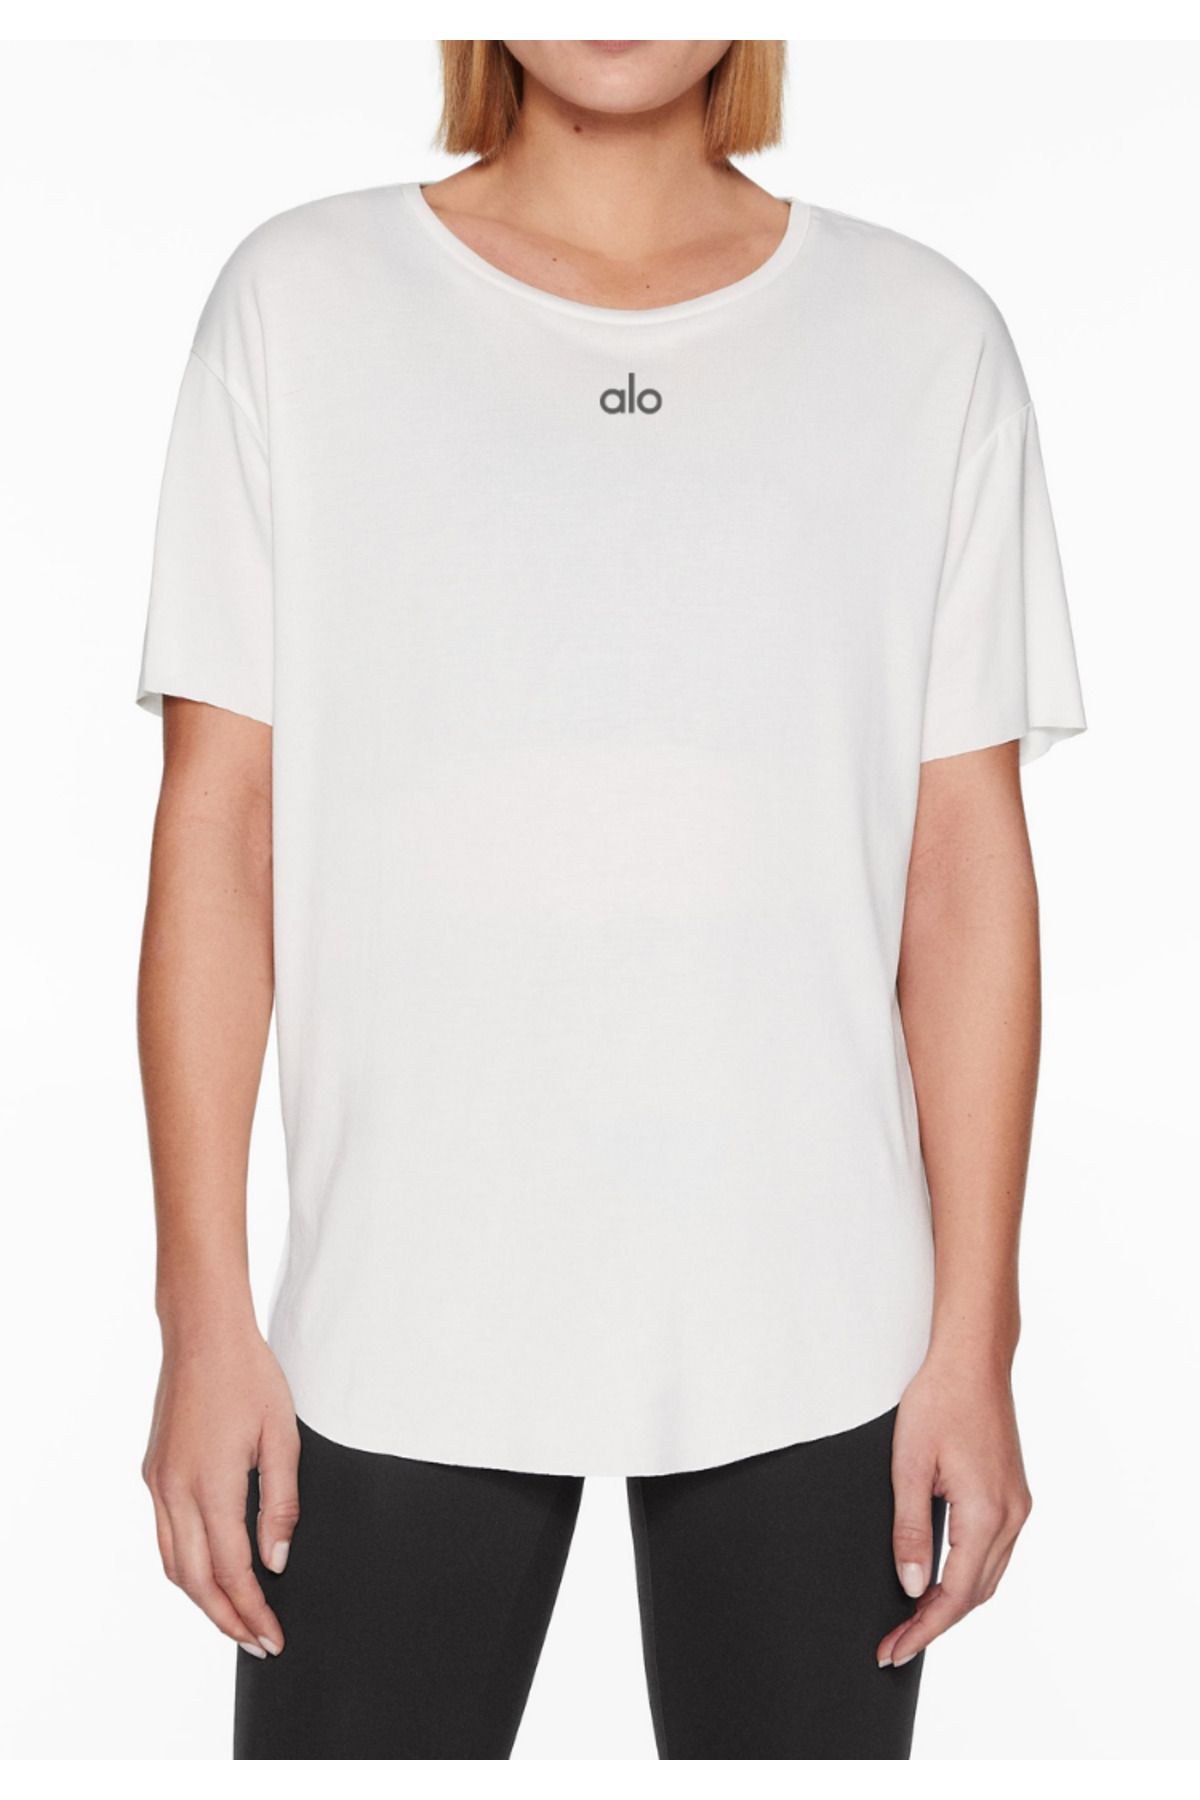 inu yoga Alo Modal Lyocell İçerikli Supersoft Yoga T-shirt Ekru